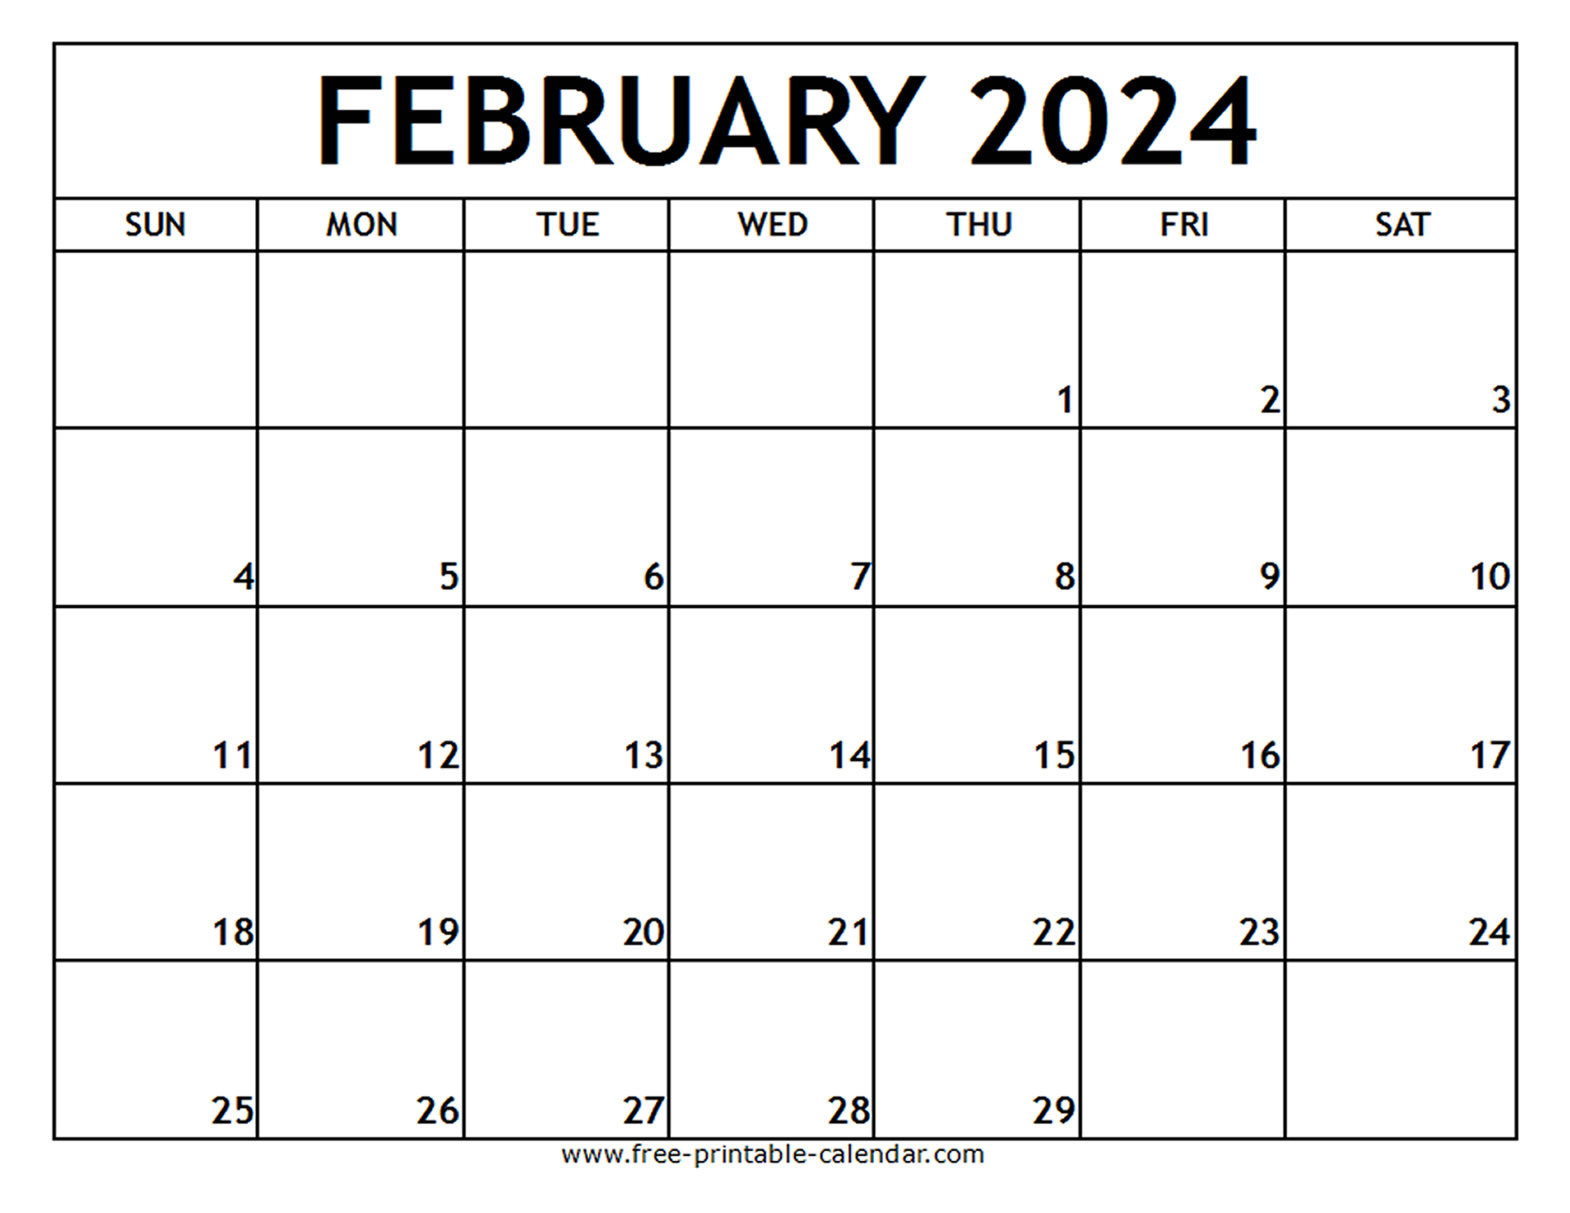 February 2024 Printable Calendar - Free-Printable-Calendar regarding Free Printable Calendar 2024 February